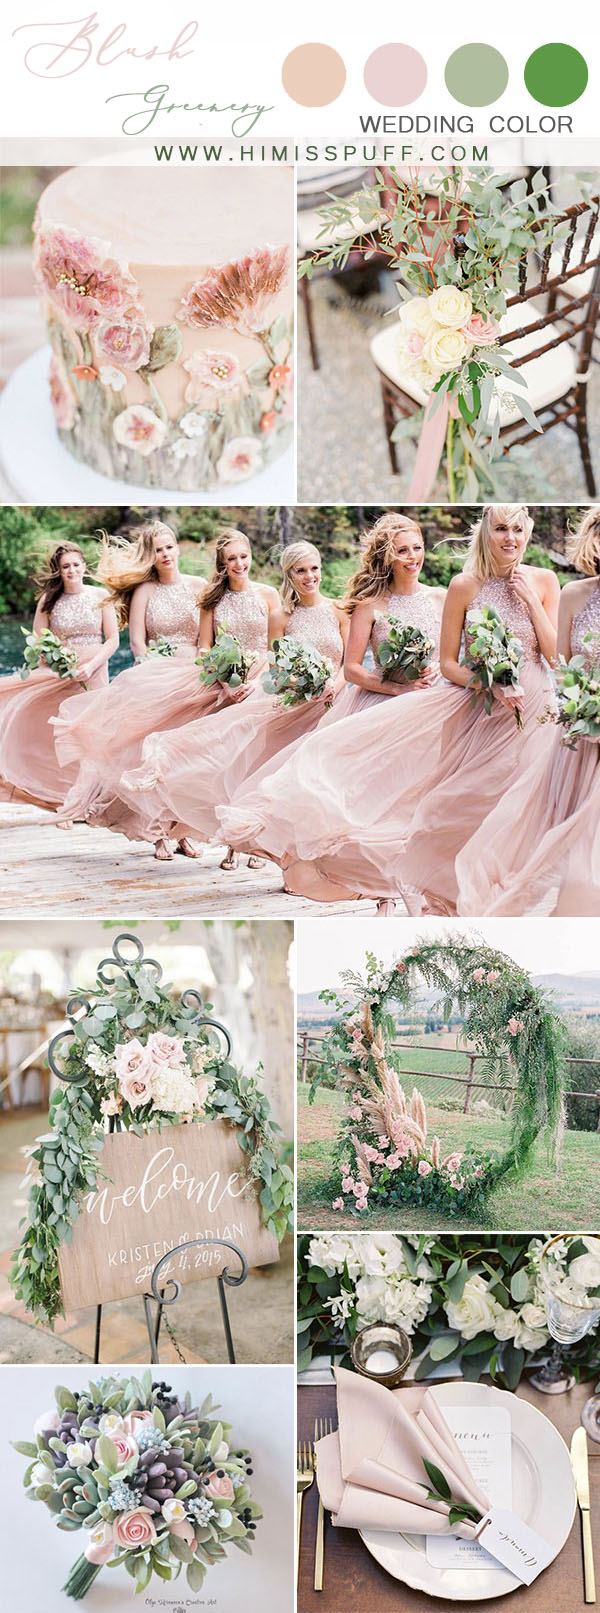 blush bridesmaid dresses greenery wedding dream wedding ideas